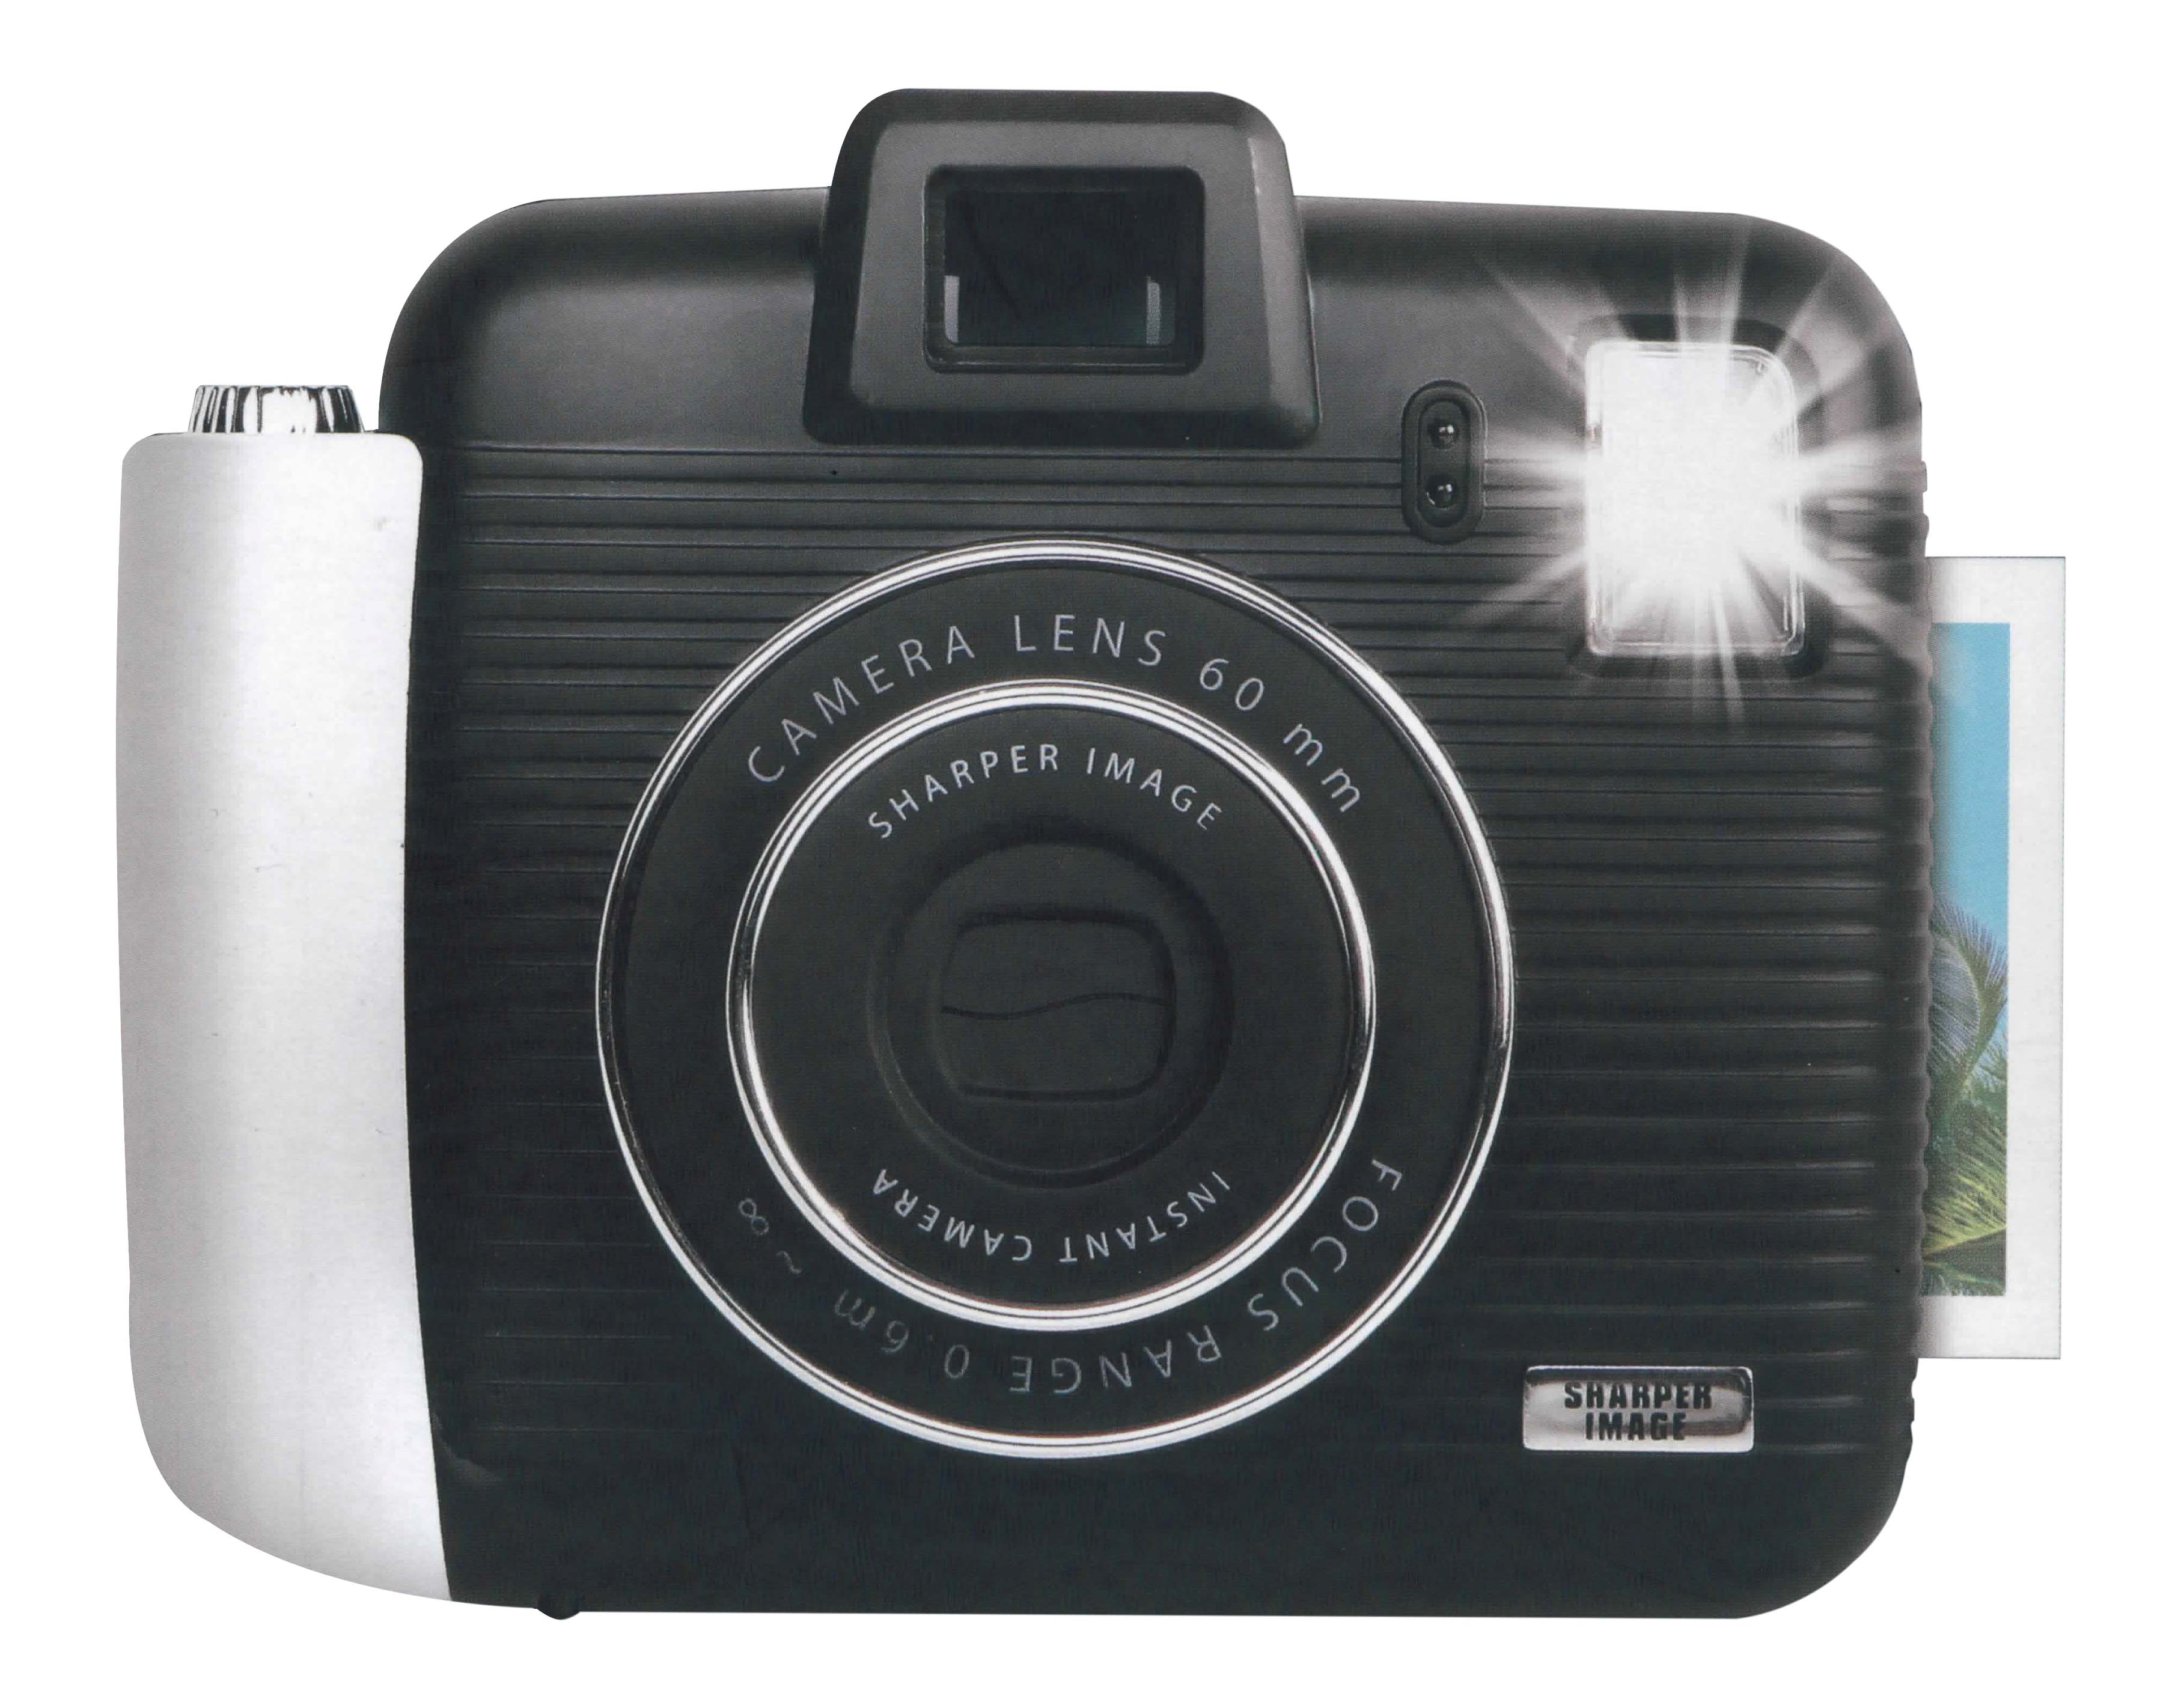 Sharper Image Instant Camera Kit (Compatible with Fujifilm Instax Mini Film) – Black - image 1 of 1